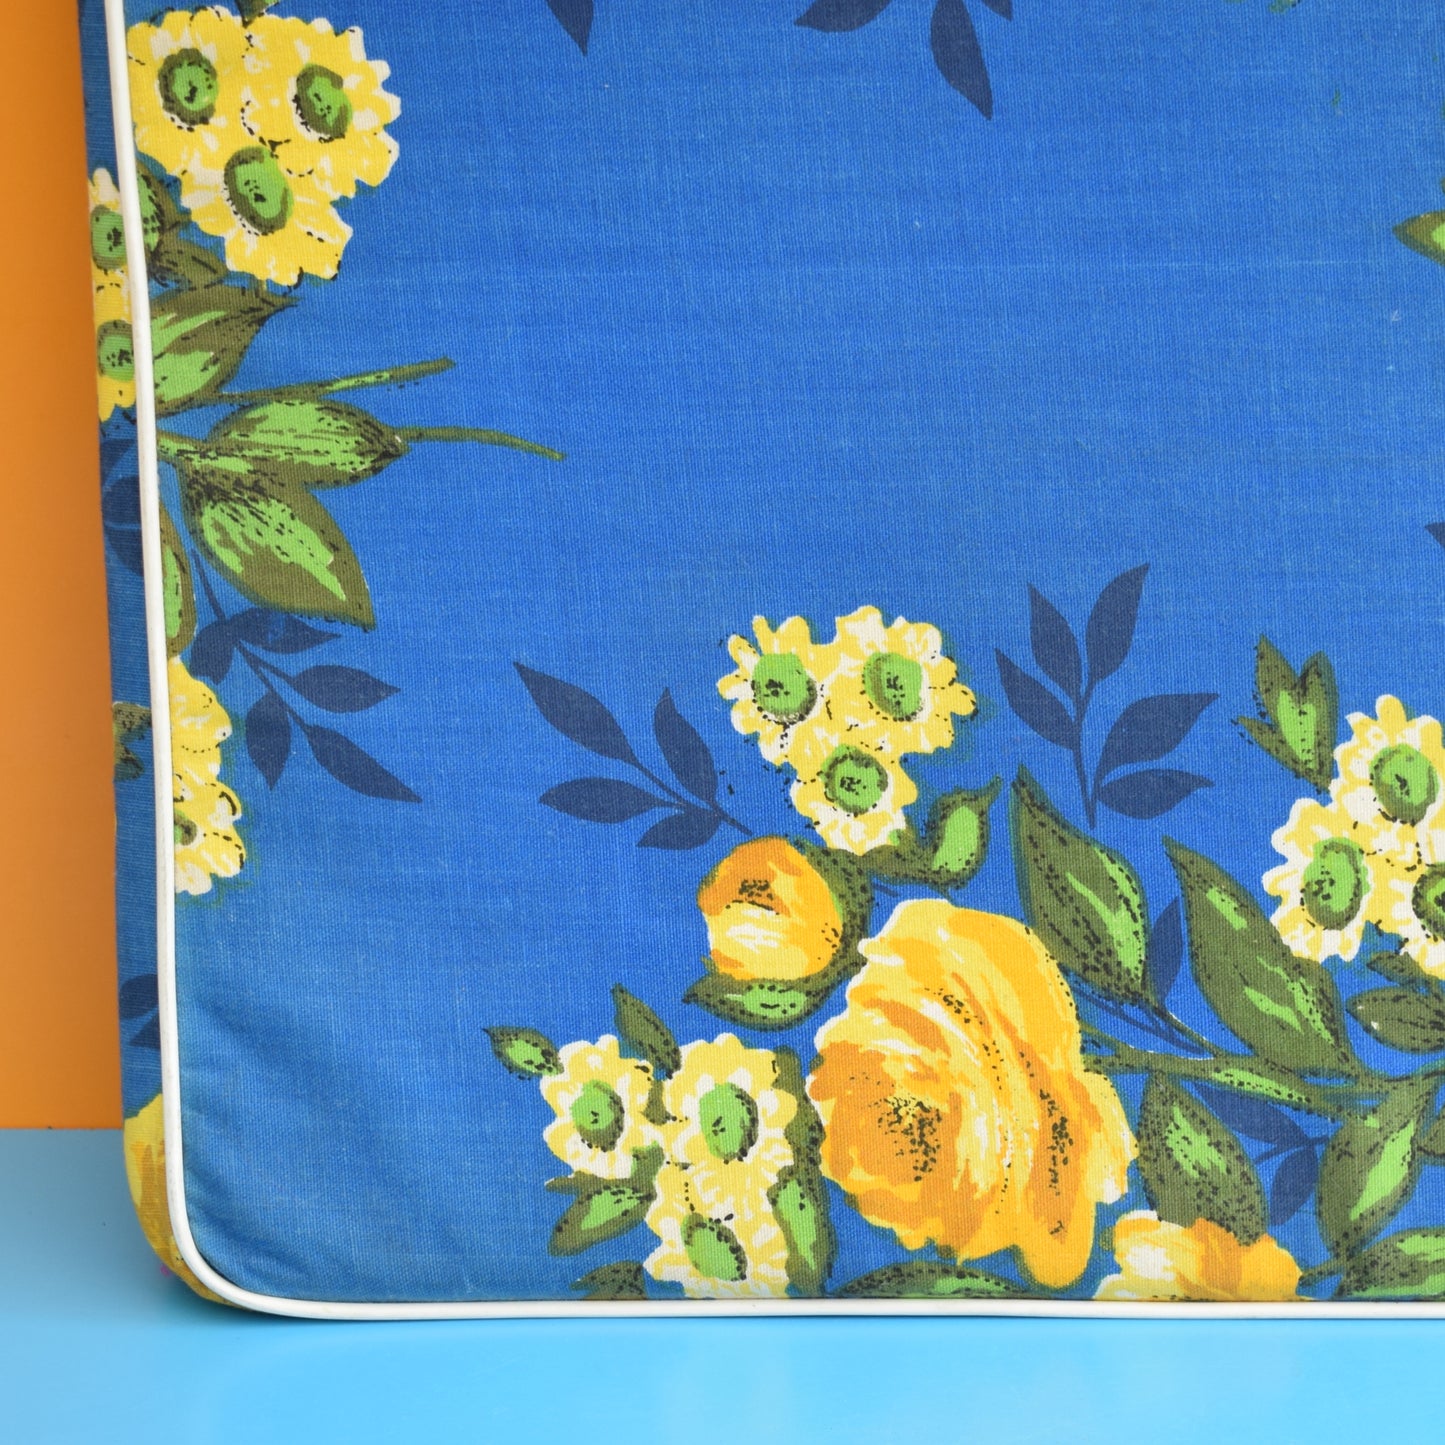 Vintage 1970s Garden Cushions / Mats -Blue & Yellow